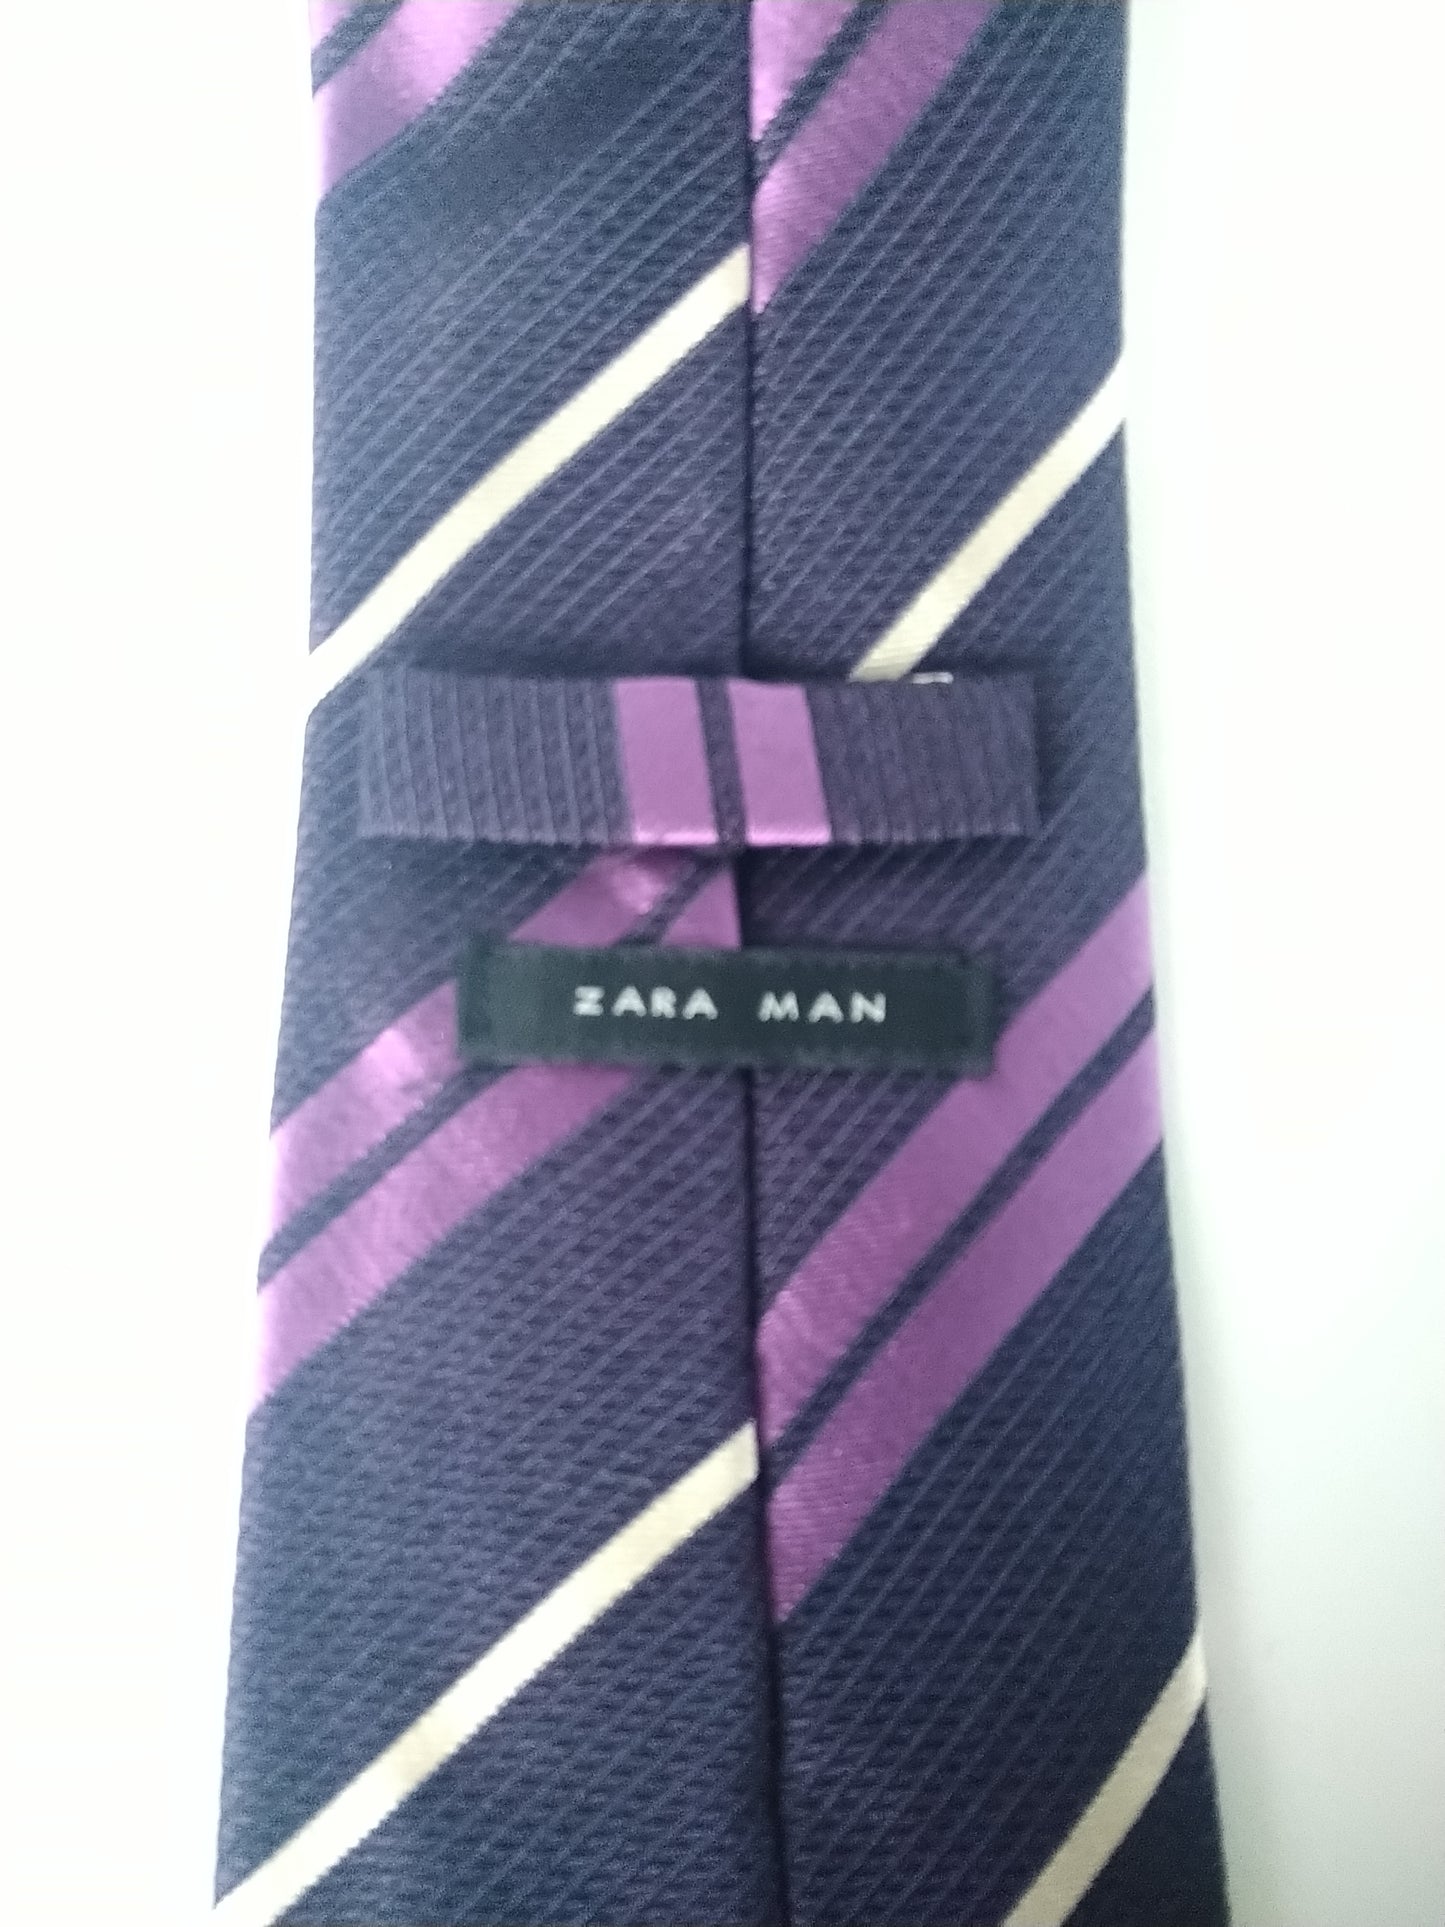 Zara Man stropdas. Paars wit motief. 100% zijde.